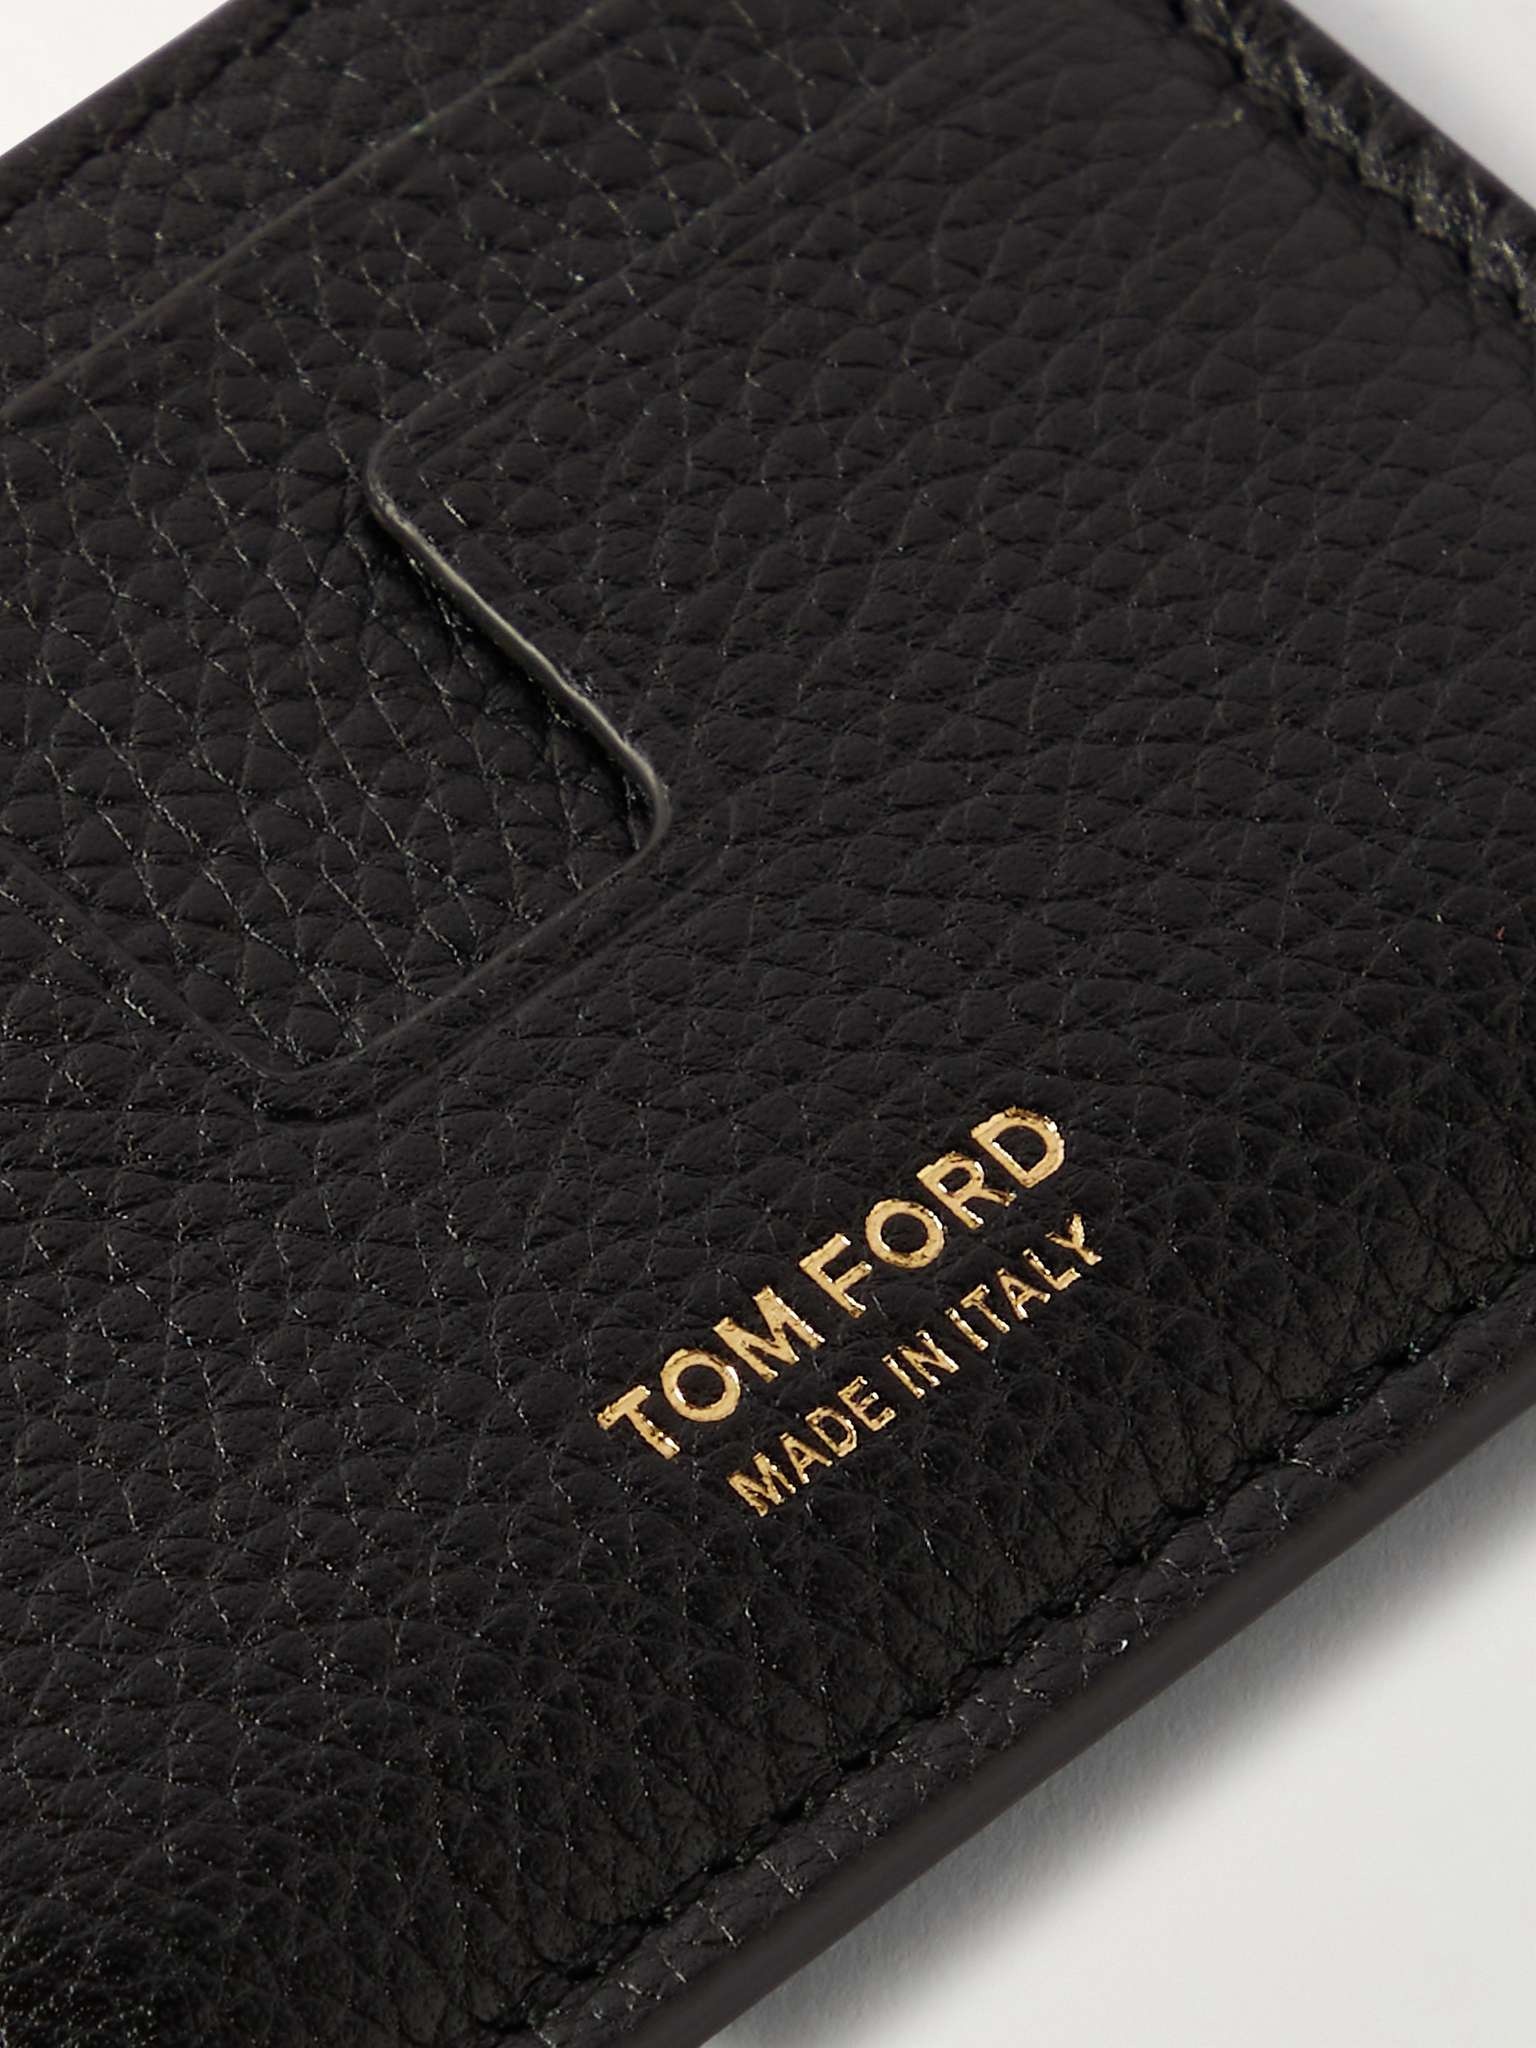 Tom Ford Wallets & Cardholders for Men - FARFETCH